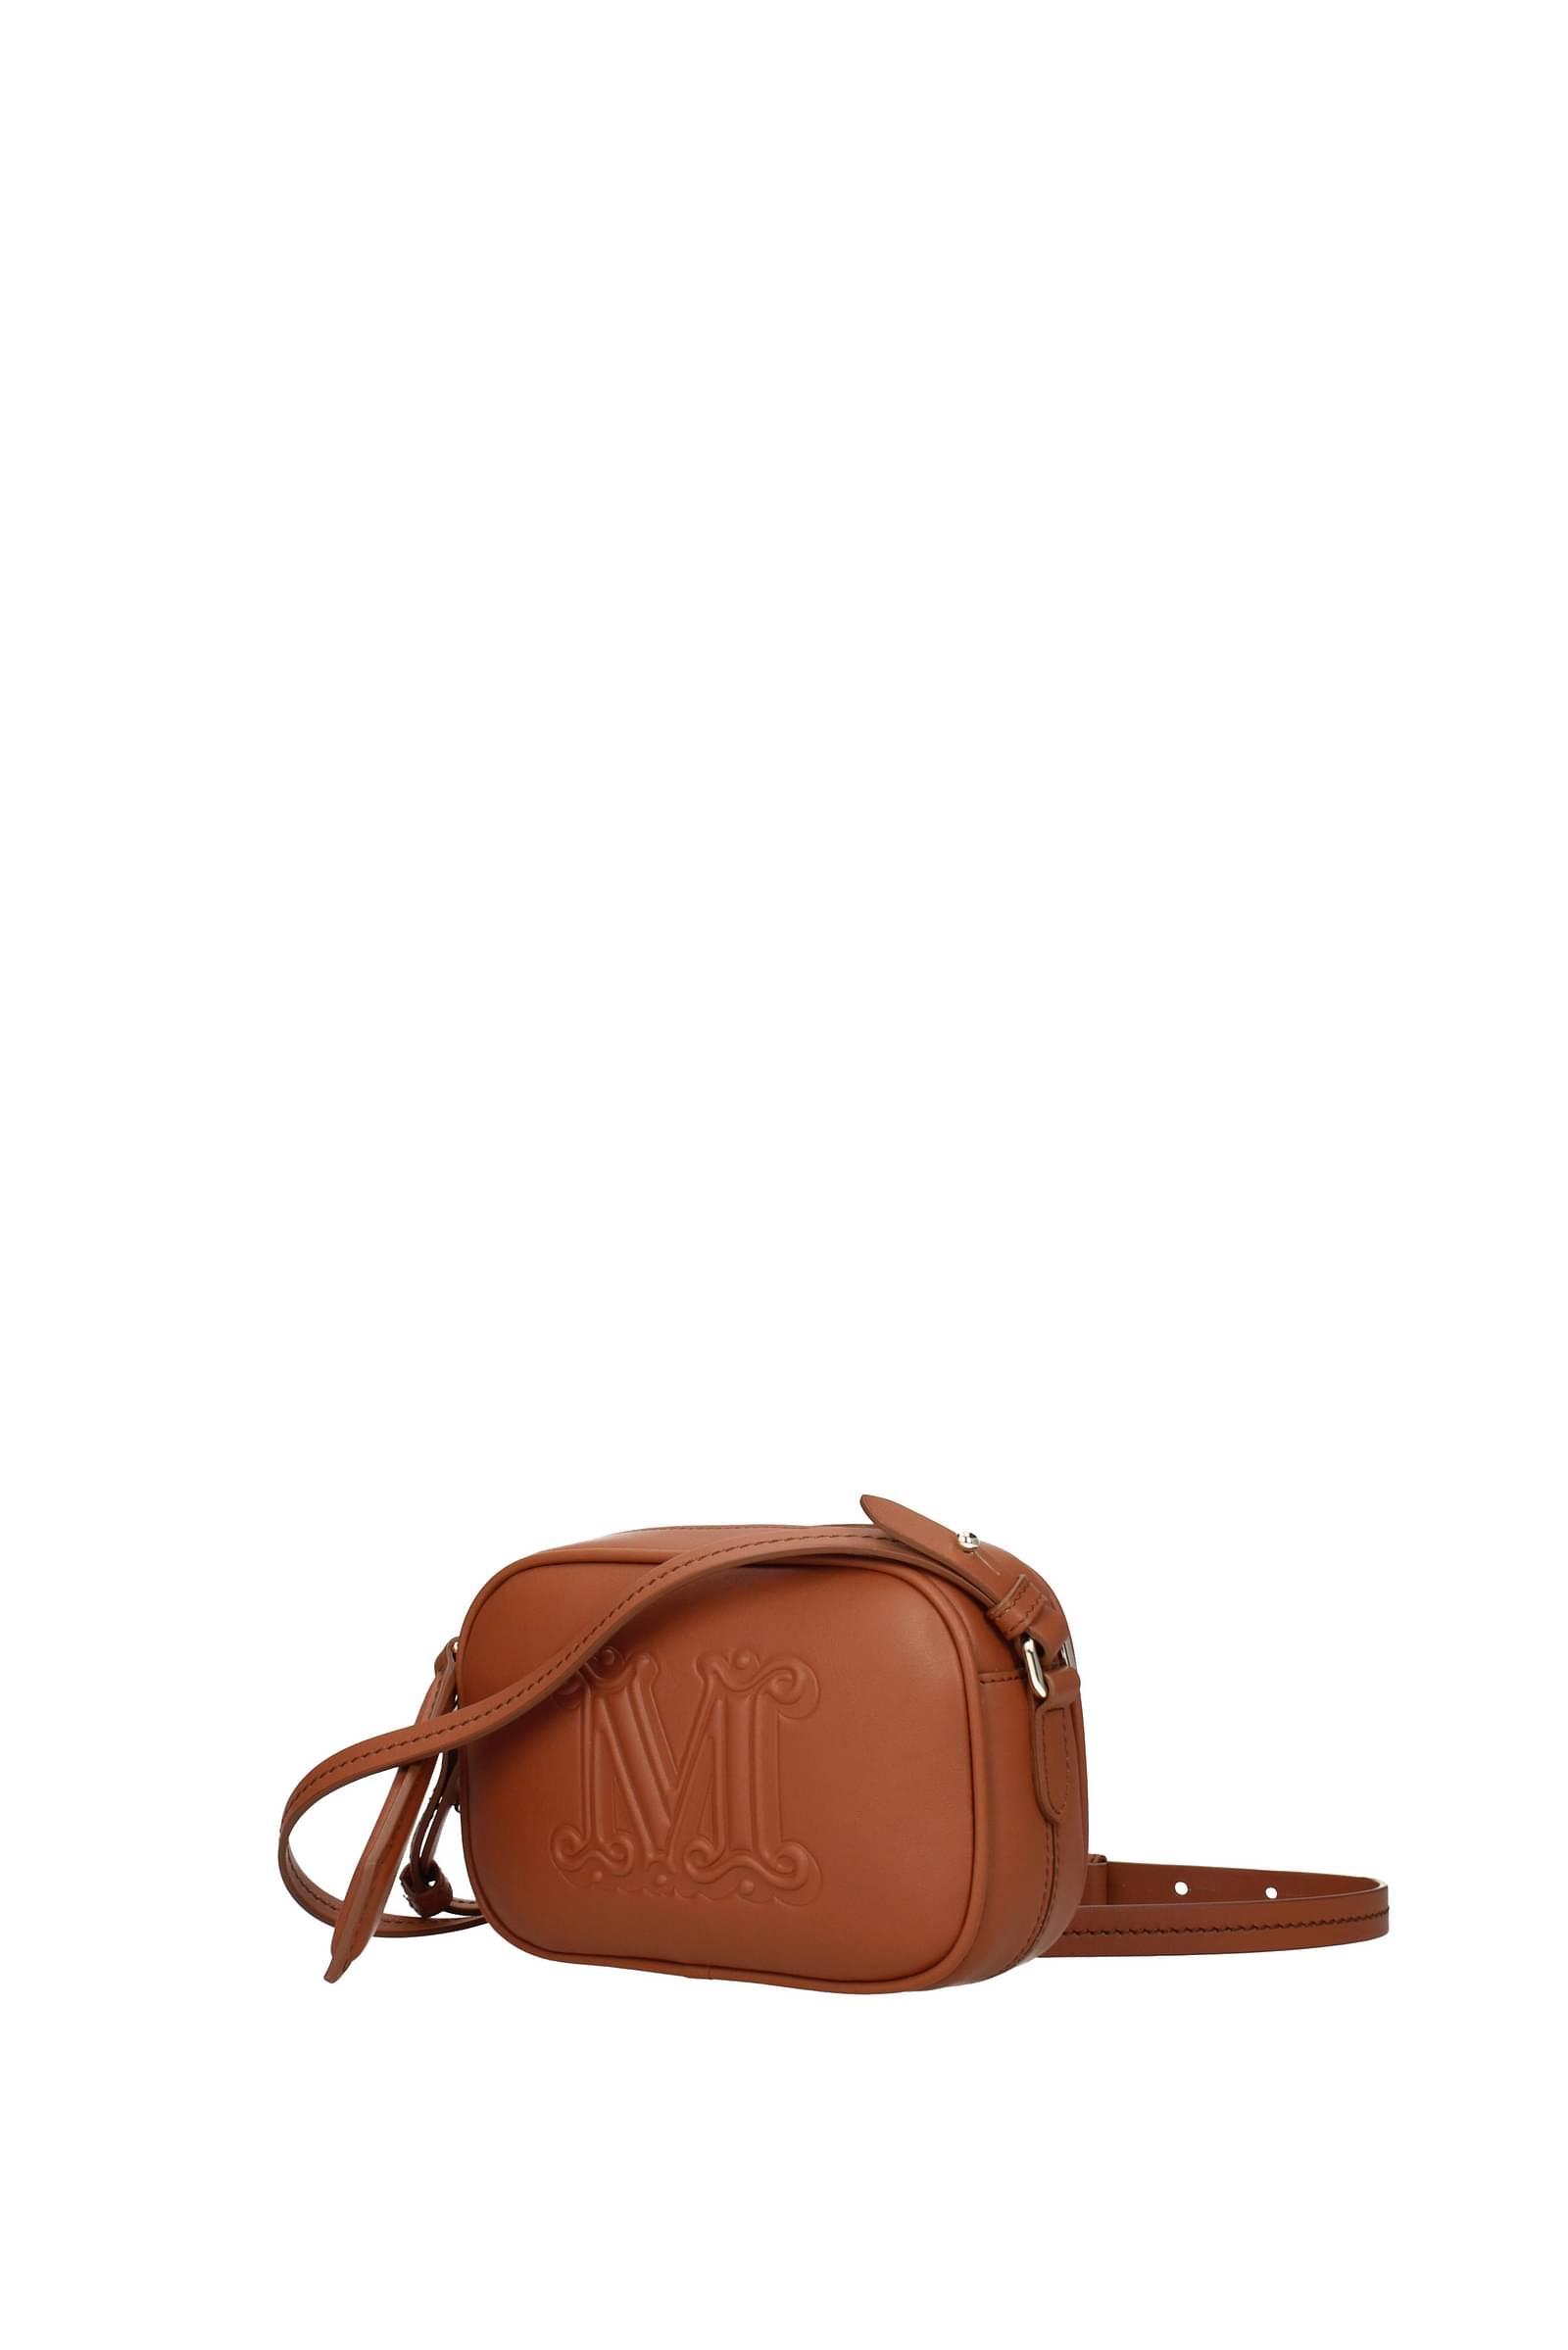 MM Leather Crossbody Bag in Brown - Max Mara